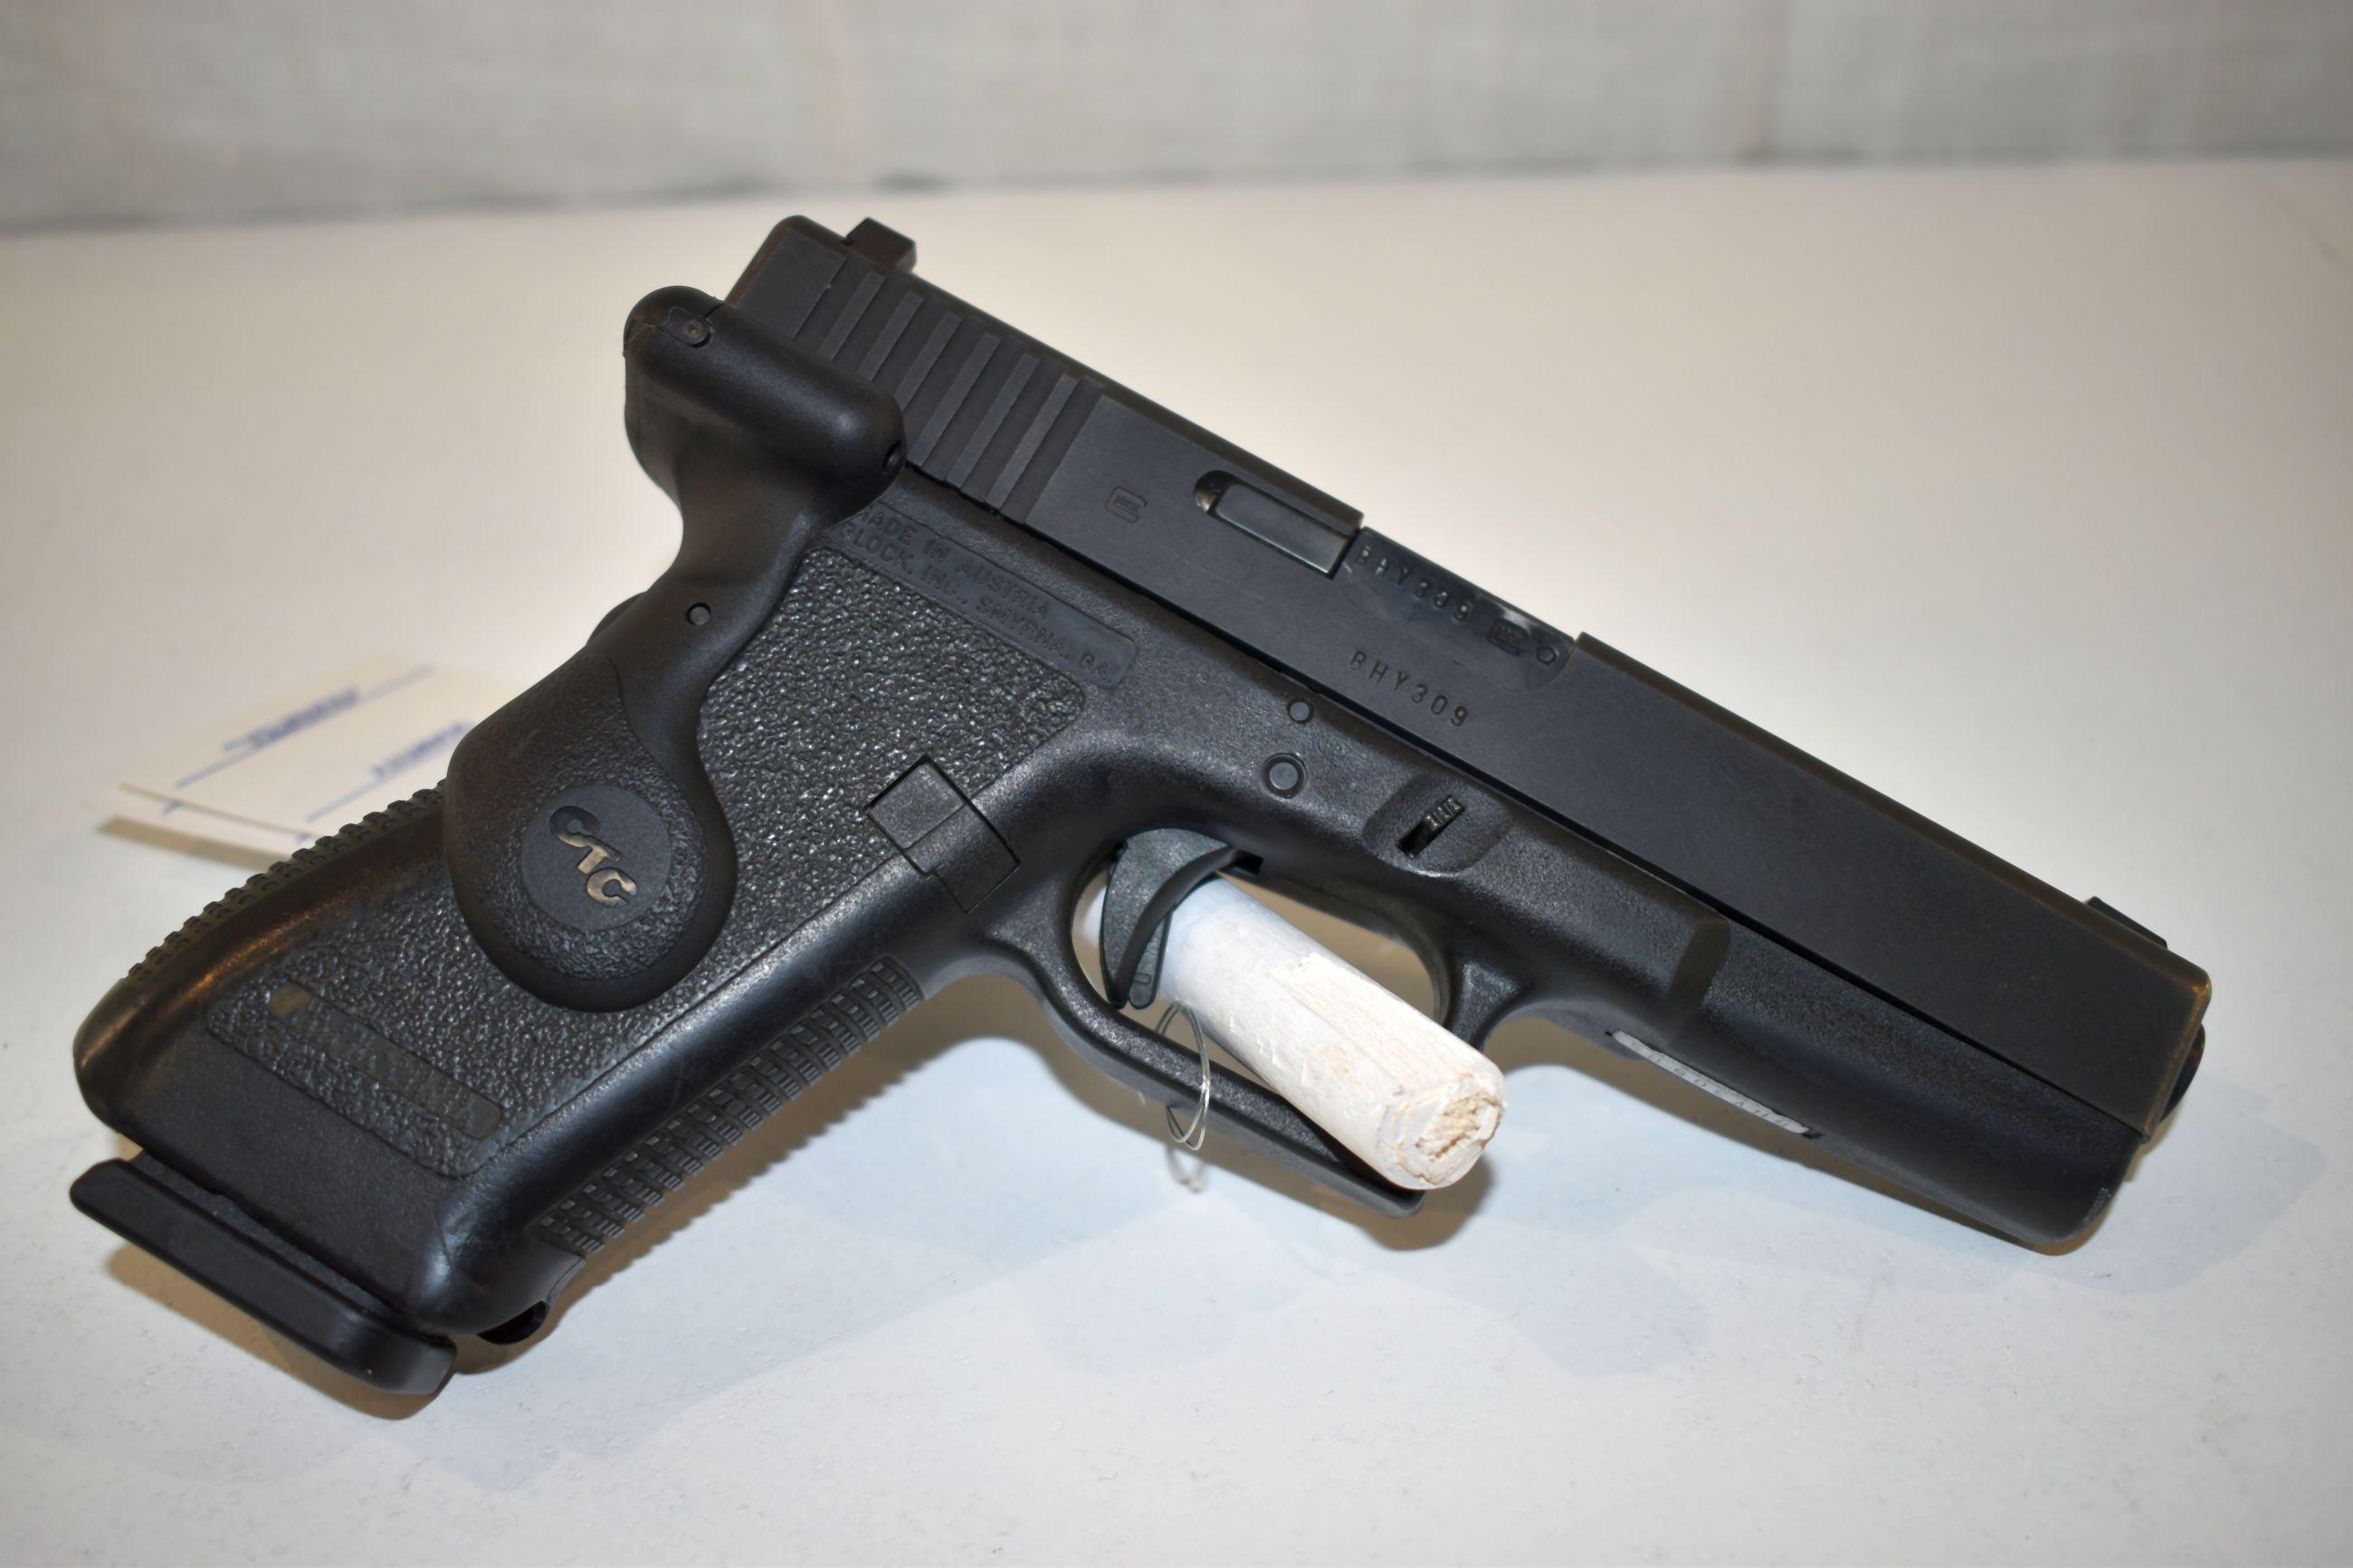 Glock Model 22 40 S&W Semi Auto Pistol, Three Magazines, SN: BHY309